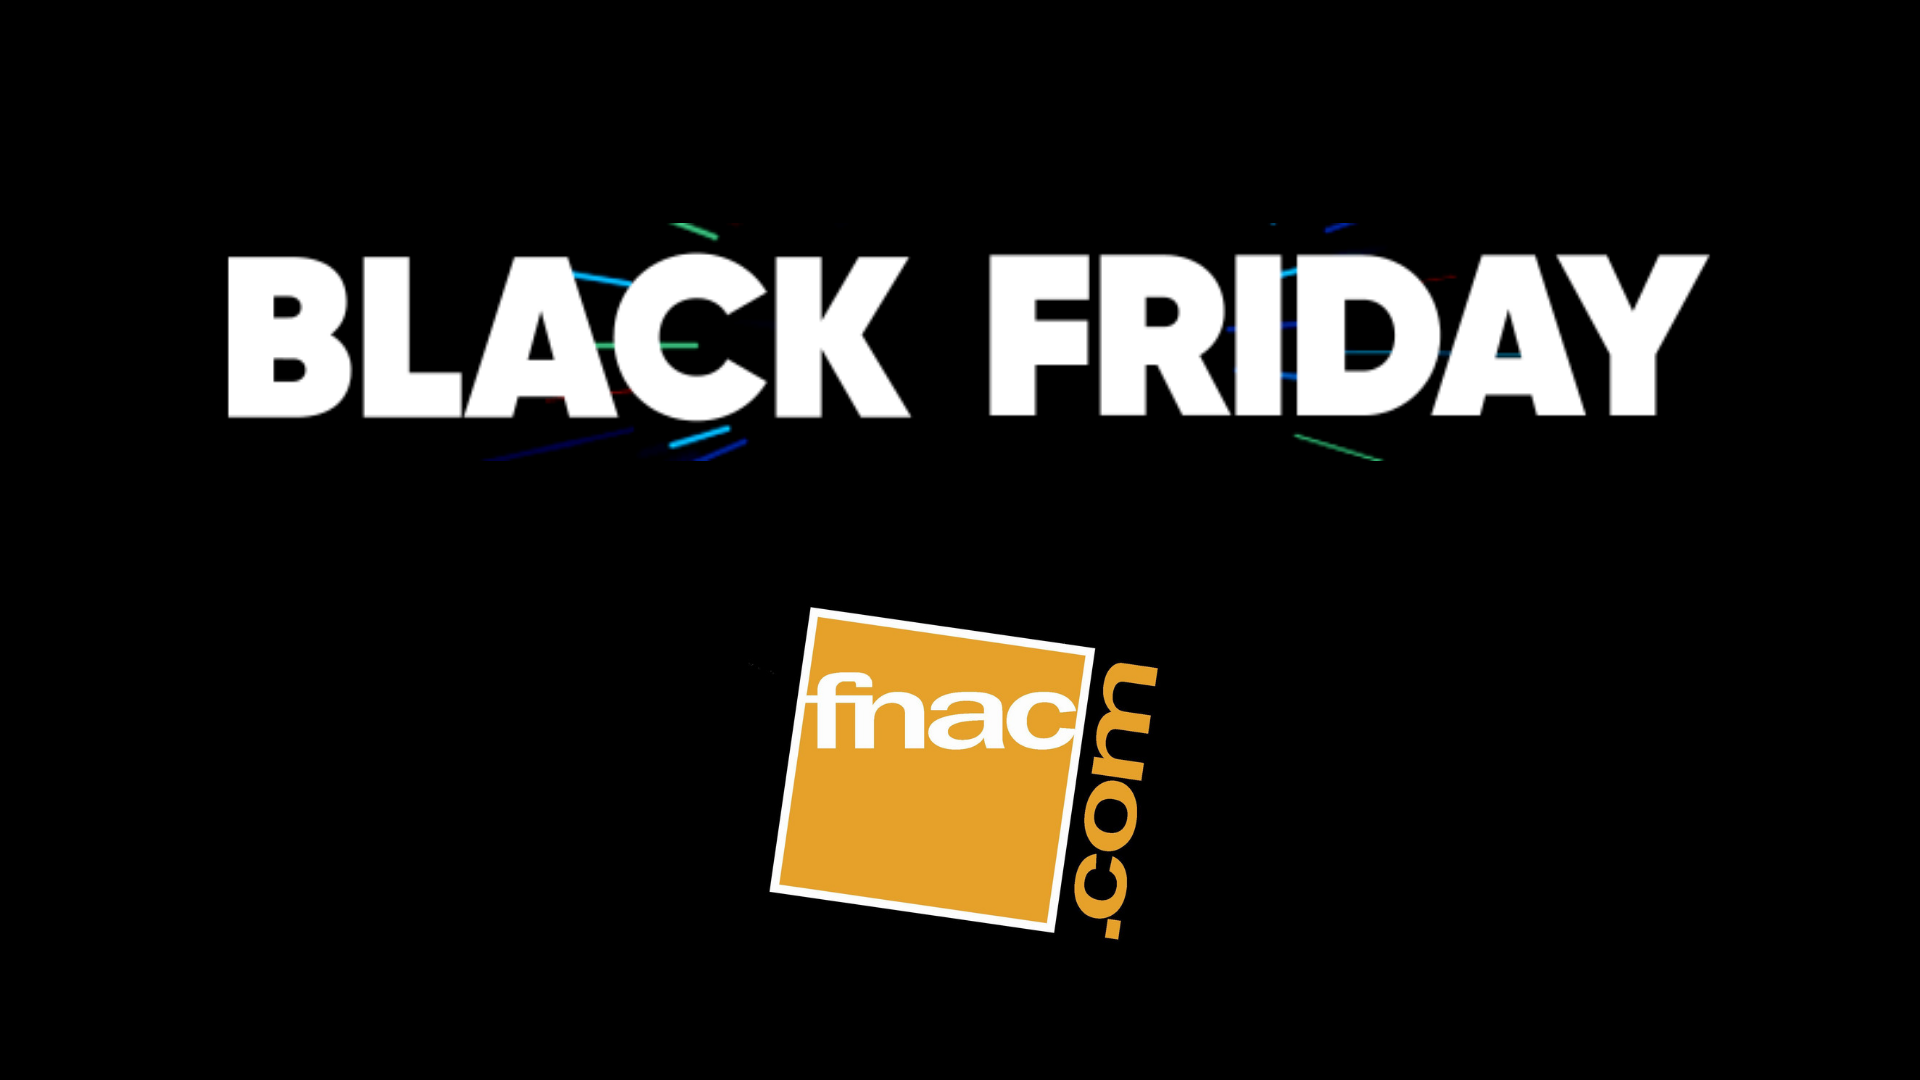 Black Friday 2018 : les 10 meilleures offres DVD/Blu-ray de la Fnac